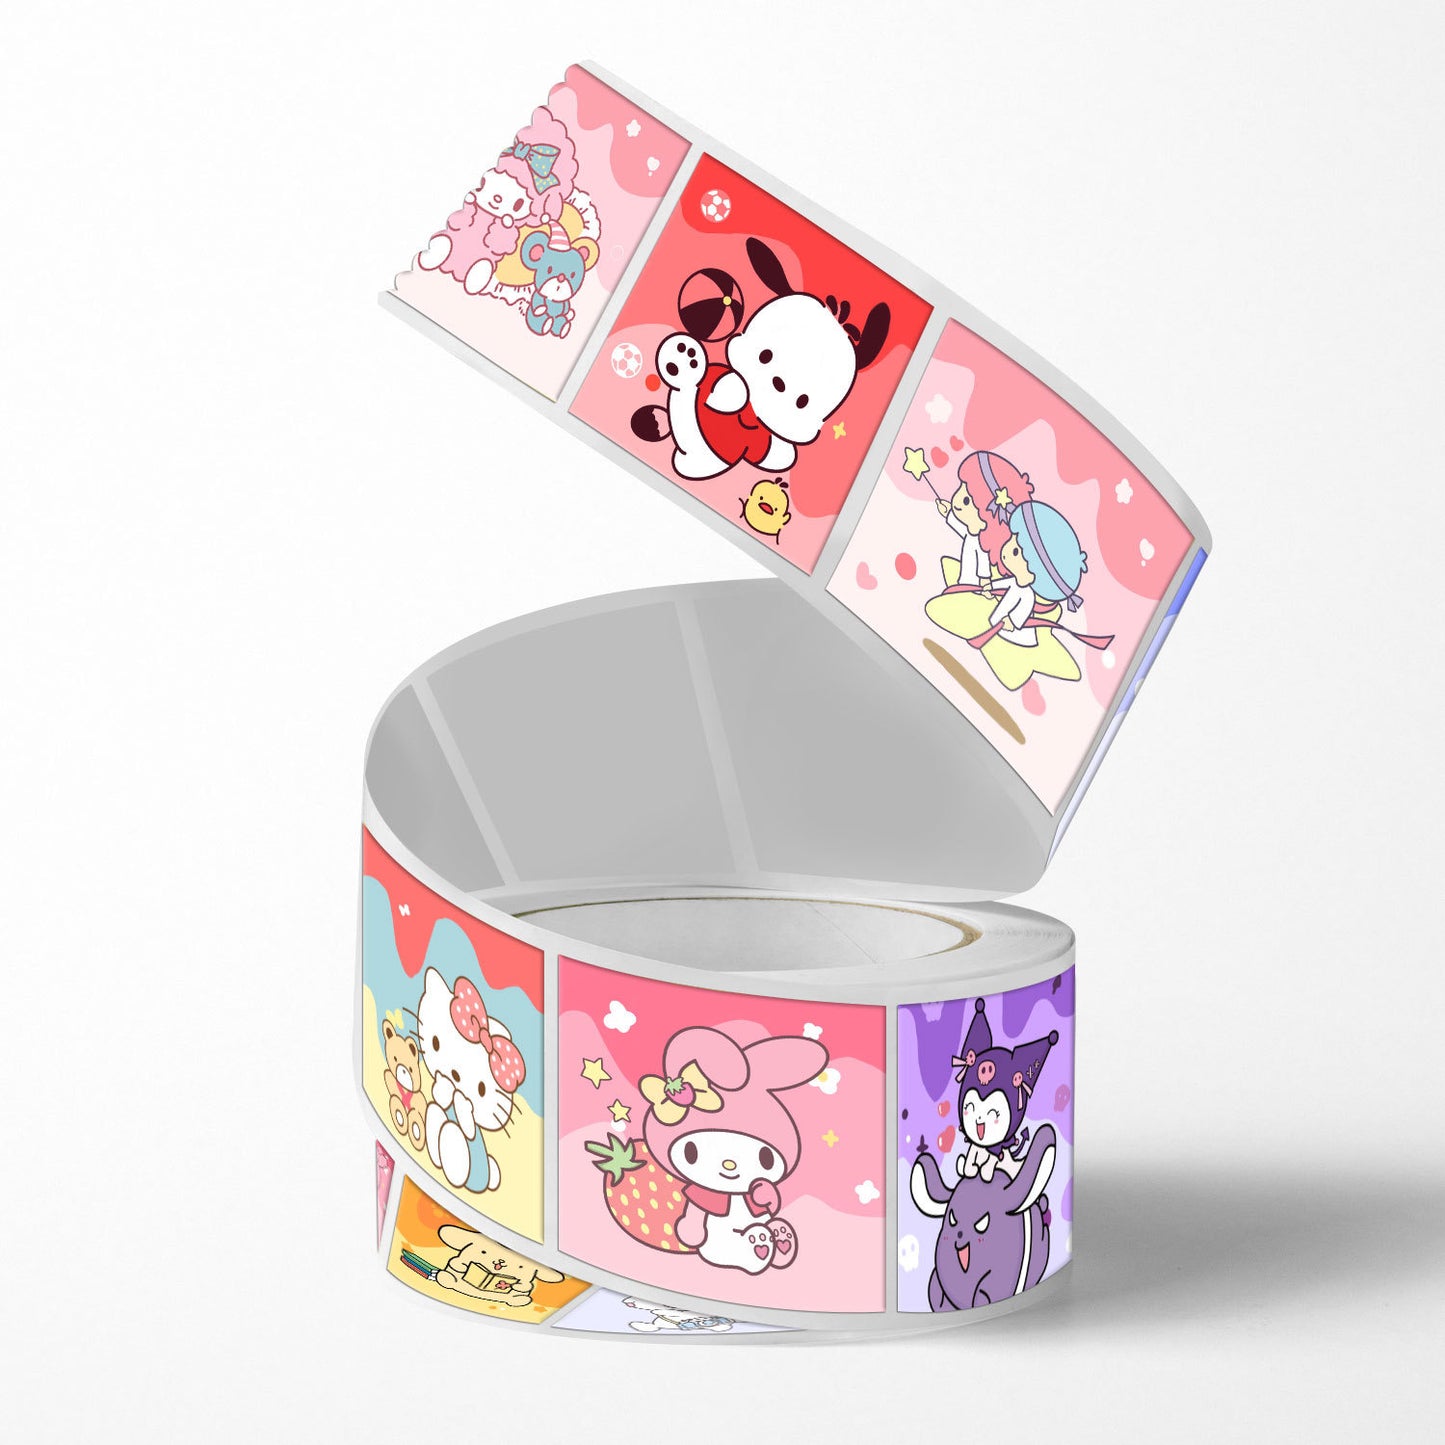 Sanrio 200 Pcs Stickers Washi Tape Roll